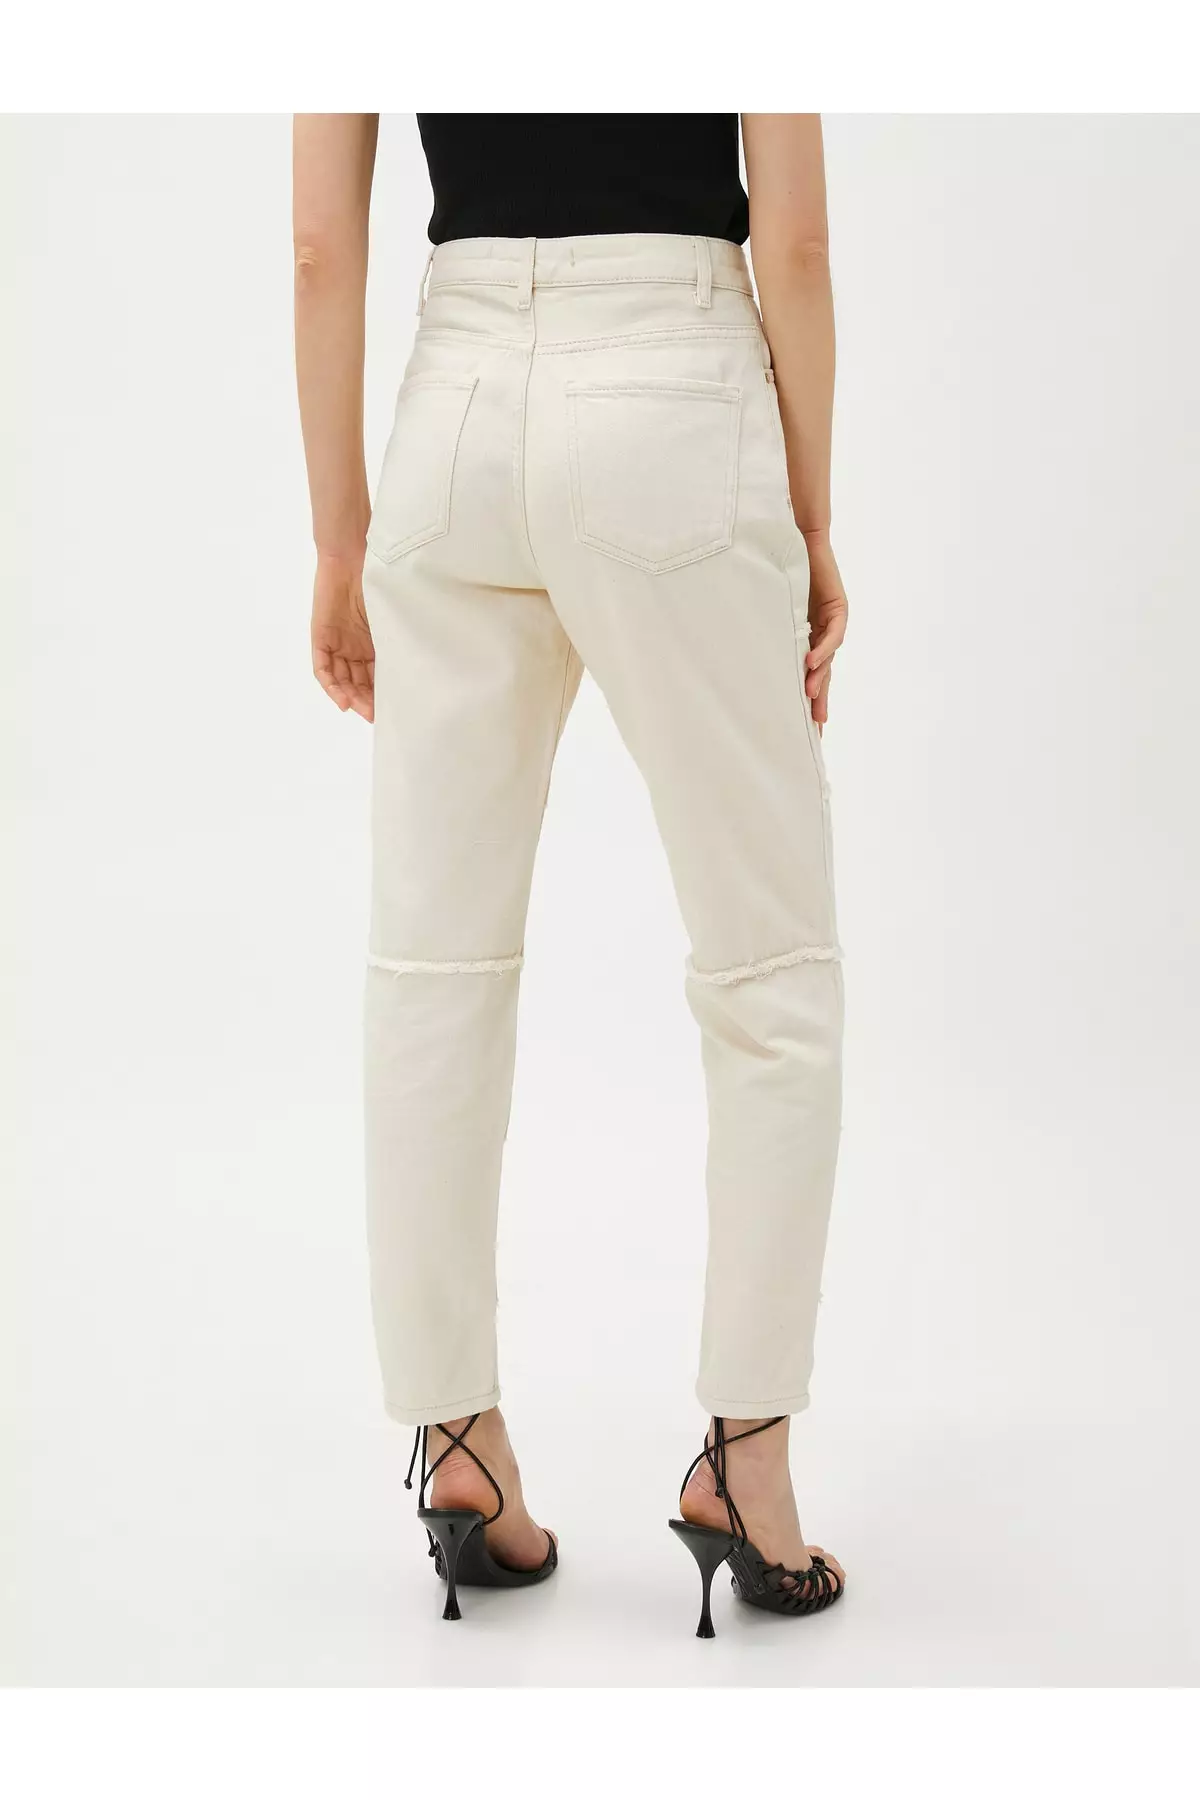 KOTON Paper Bag Cut Jeans 2024, Buy KOTON Online